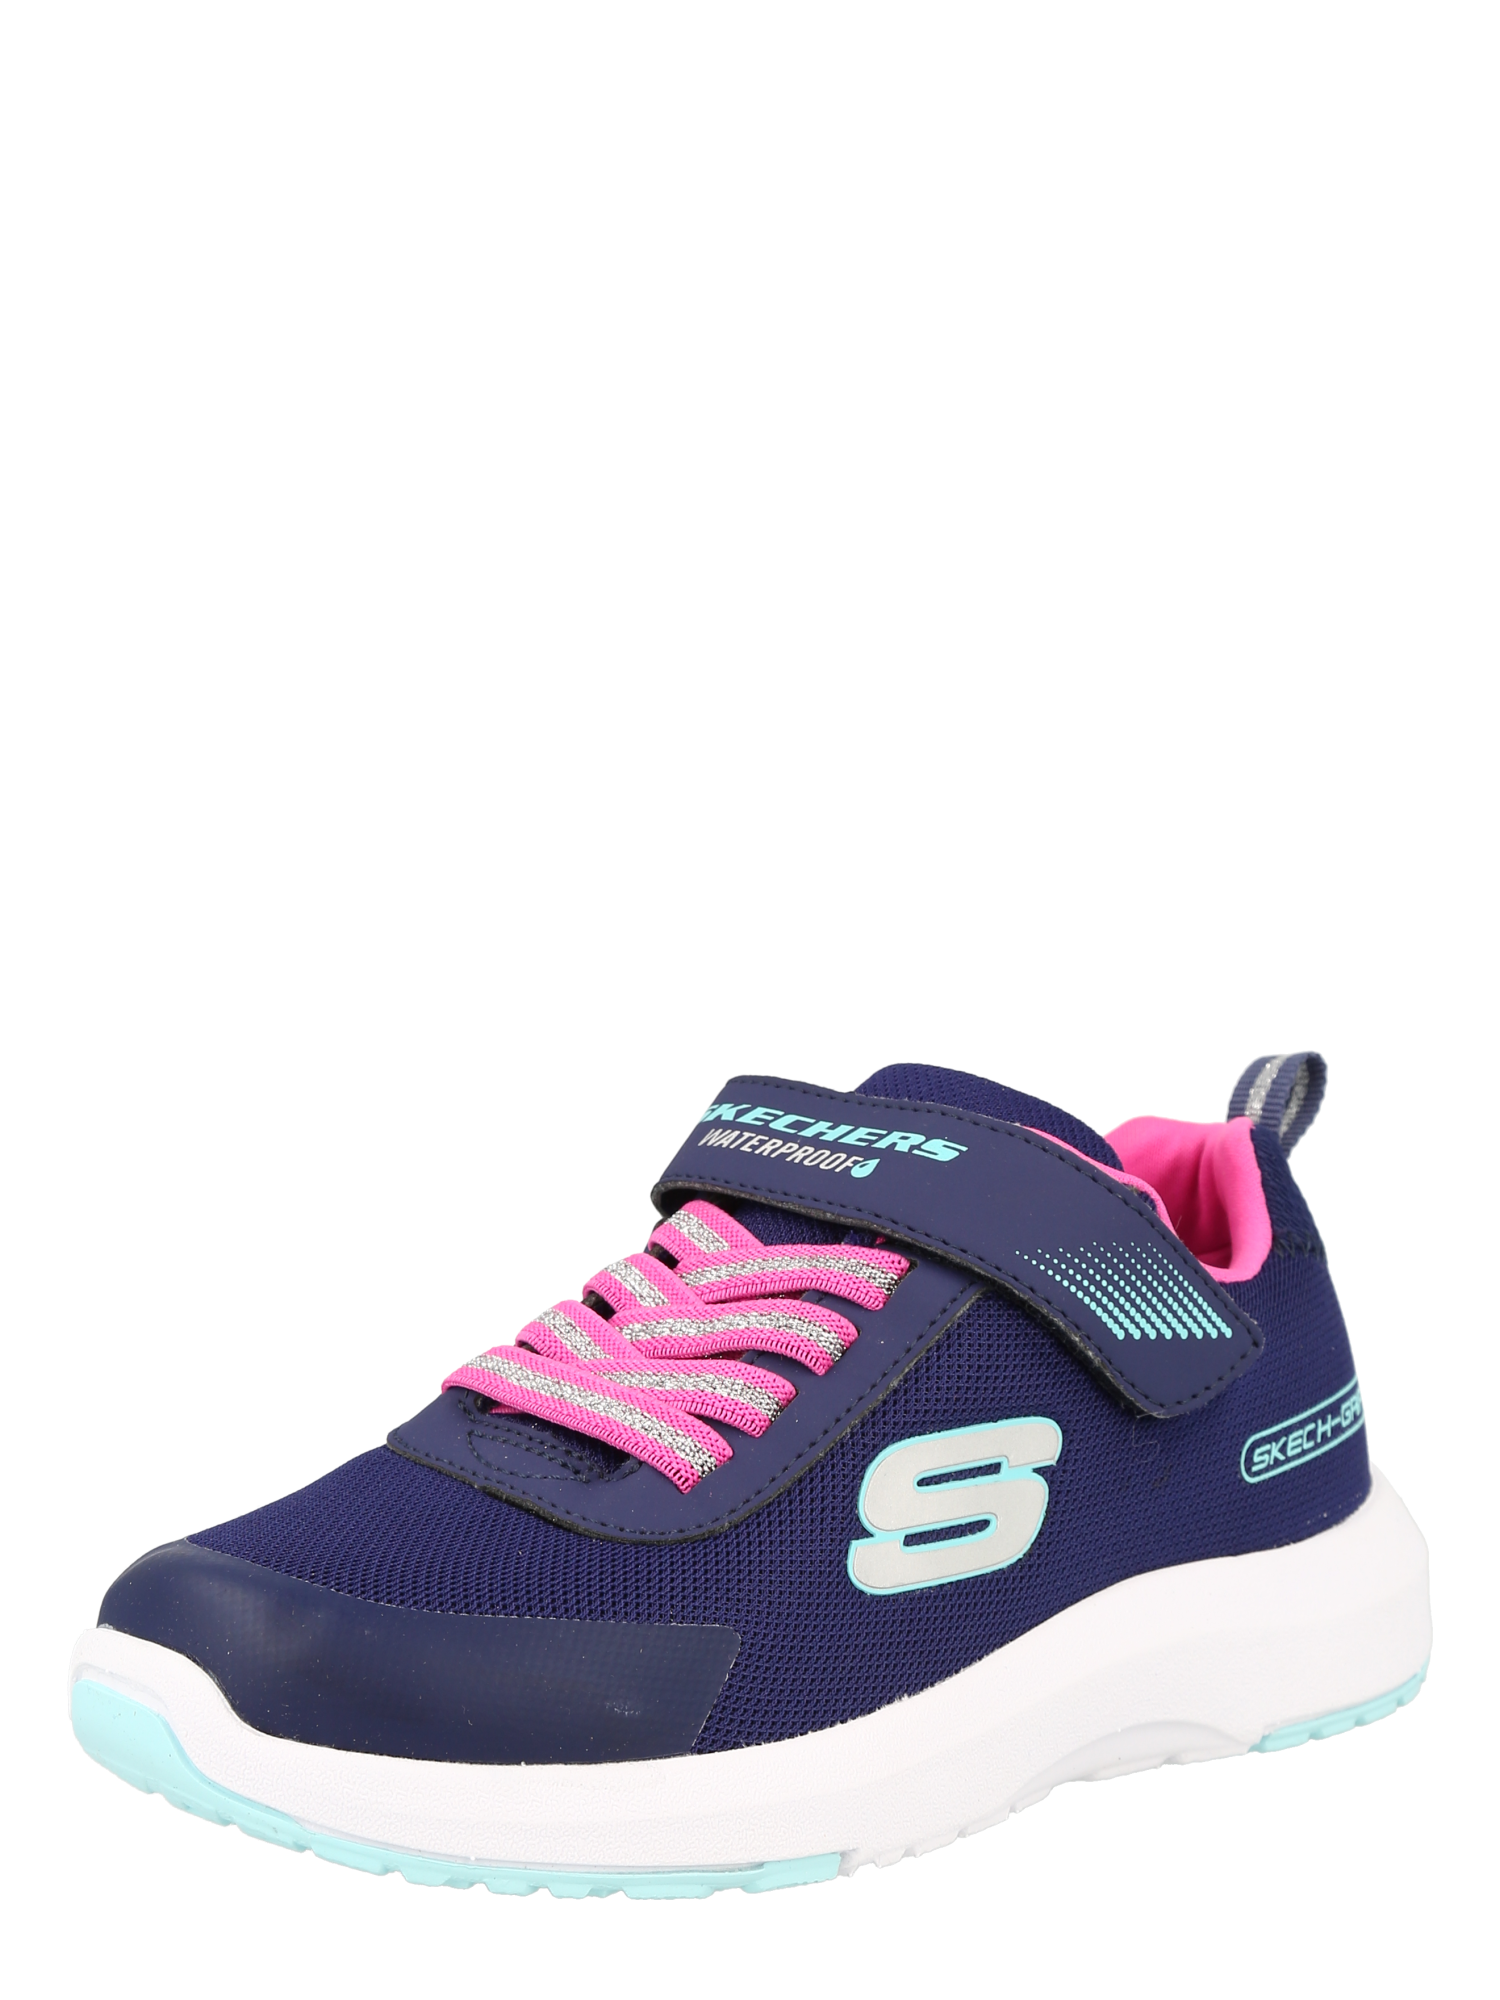 Bimba Bambini SKECHERS Sneaker in Navy, Blu Chiaro 